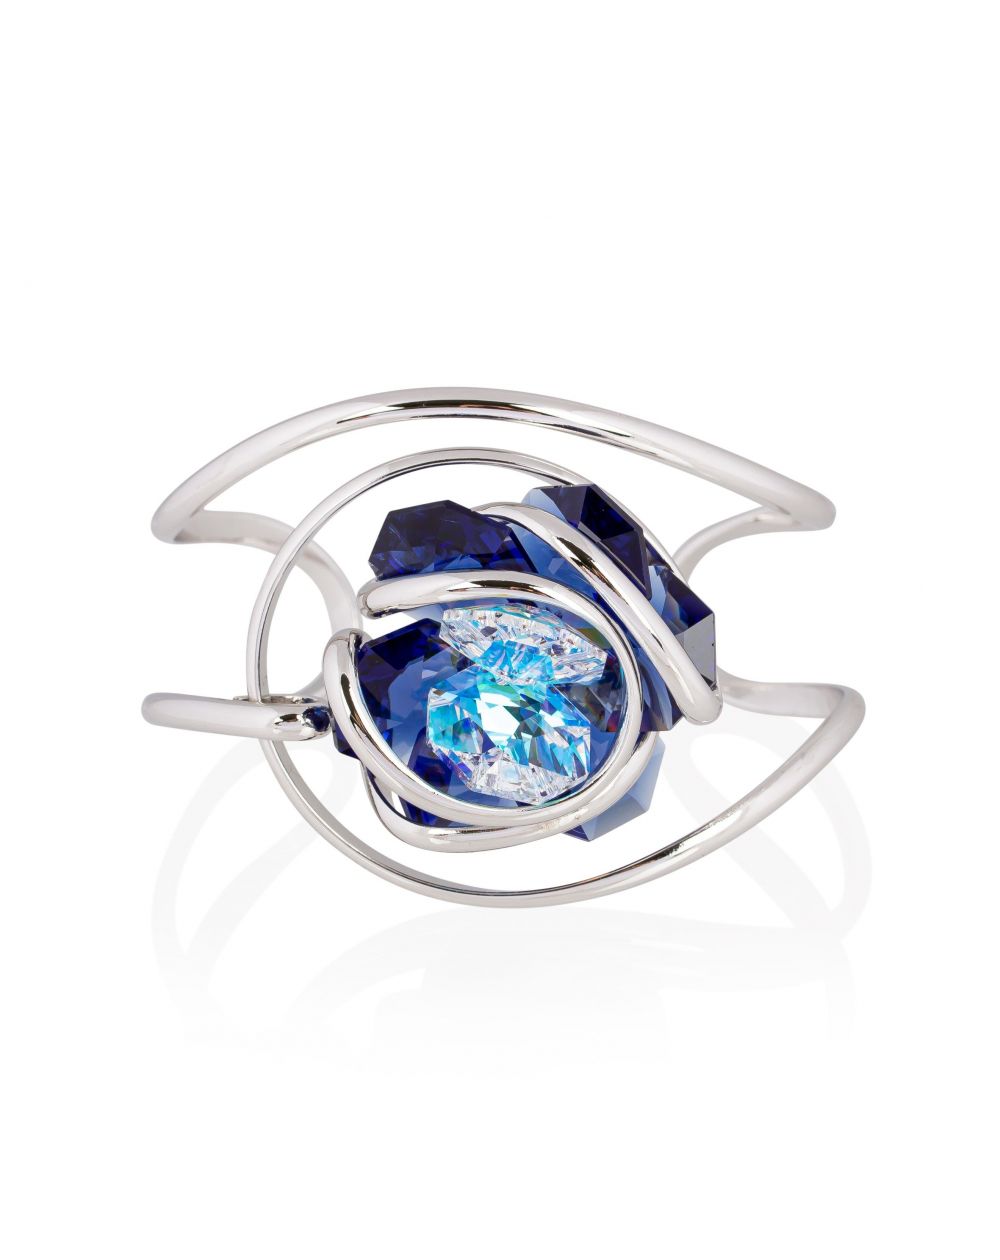 Andrea Marazzini bijoux - Bracelet cristal Swarovski Flower F48 New Blue